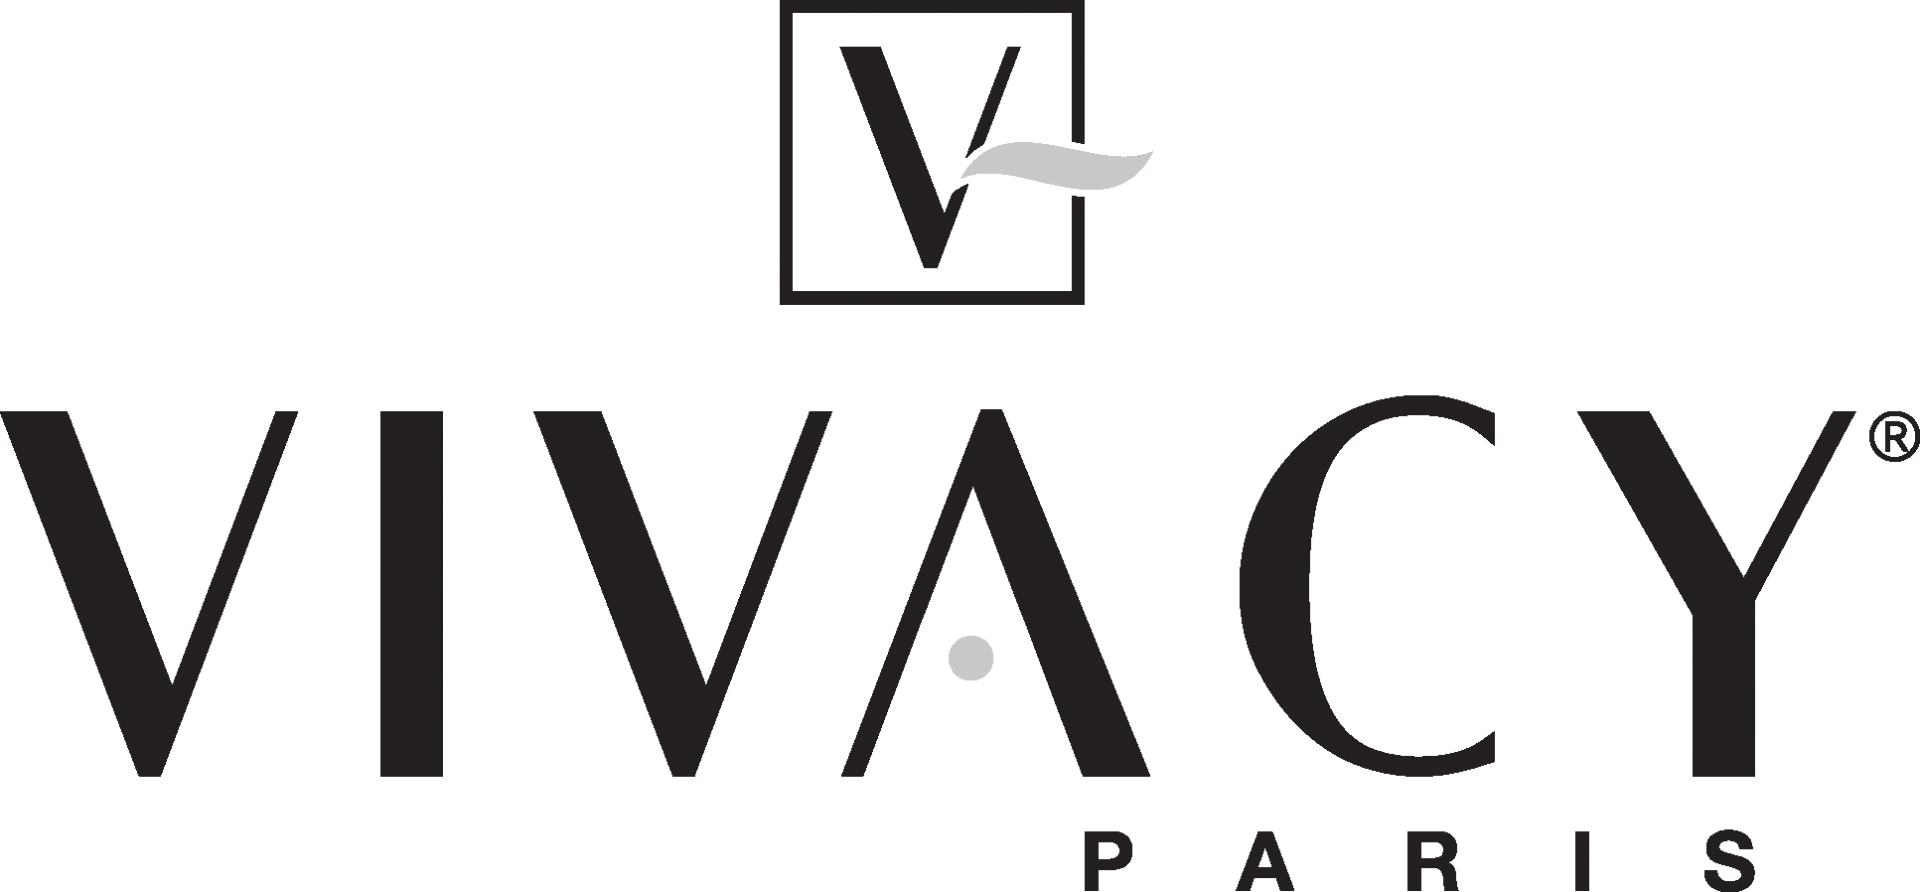 Vivacy logo